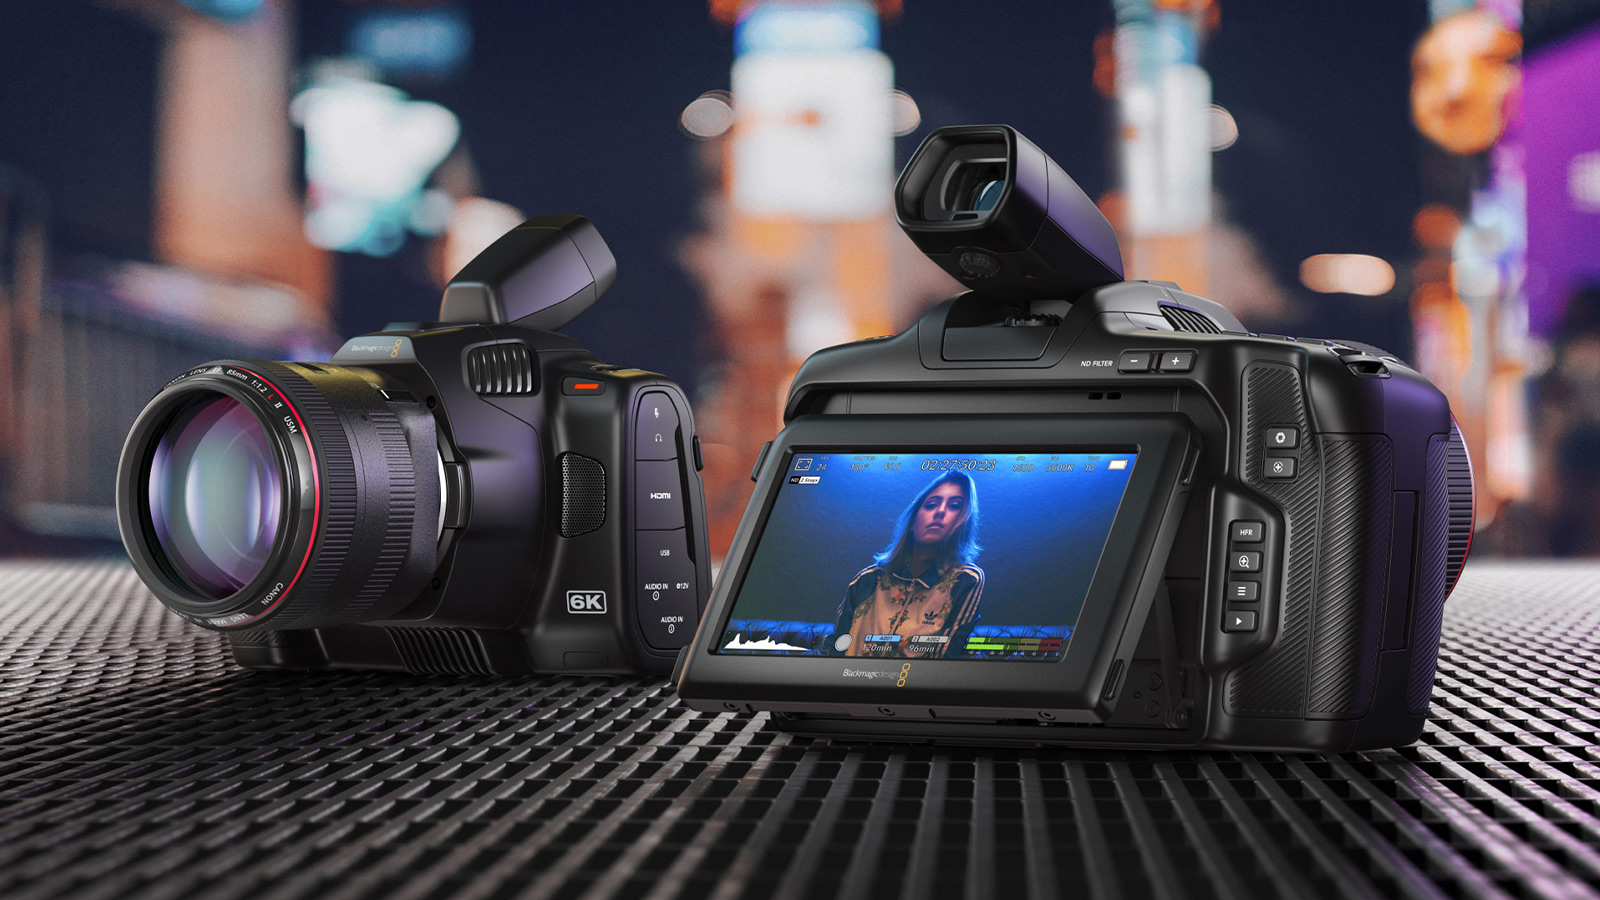 pocket cinema camera 6k pro